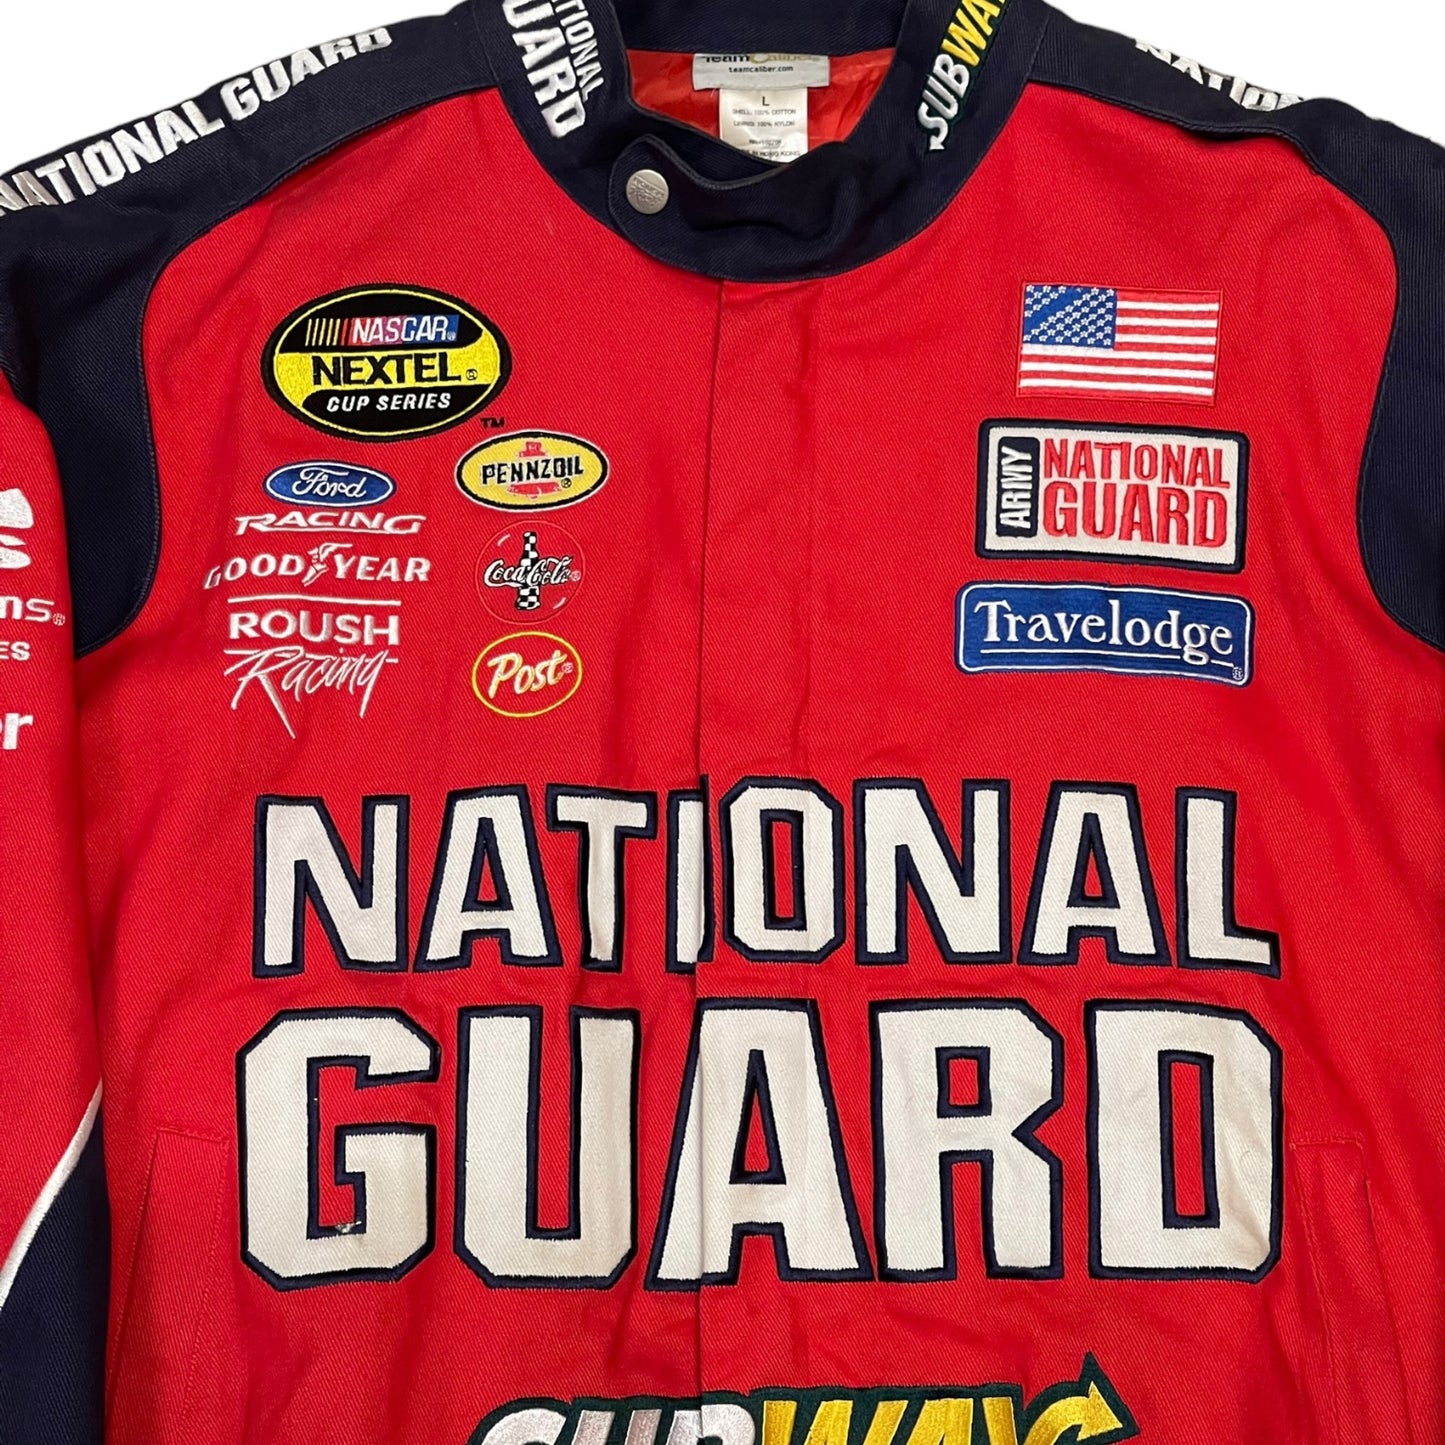 Roush Racing National Guard Subway Nascar Jacket